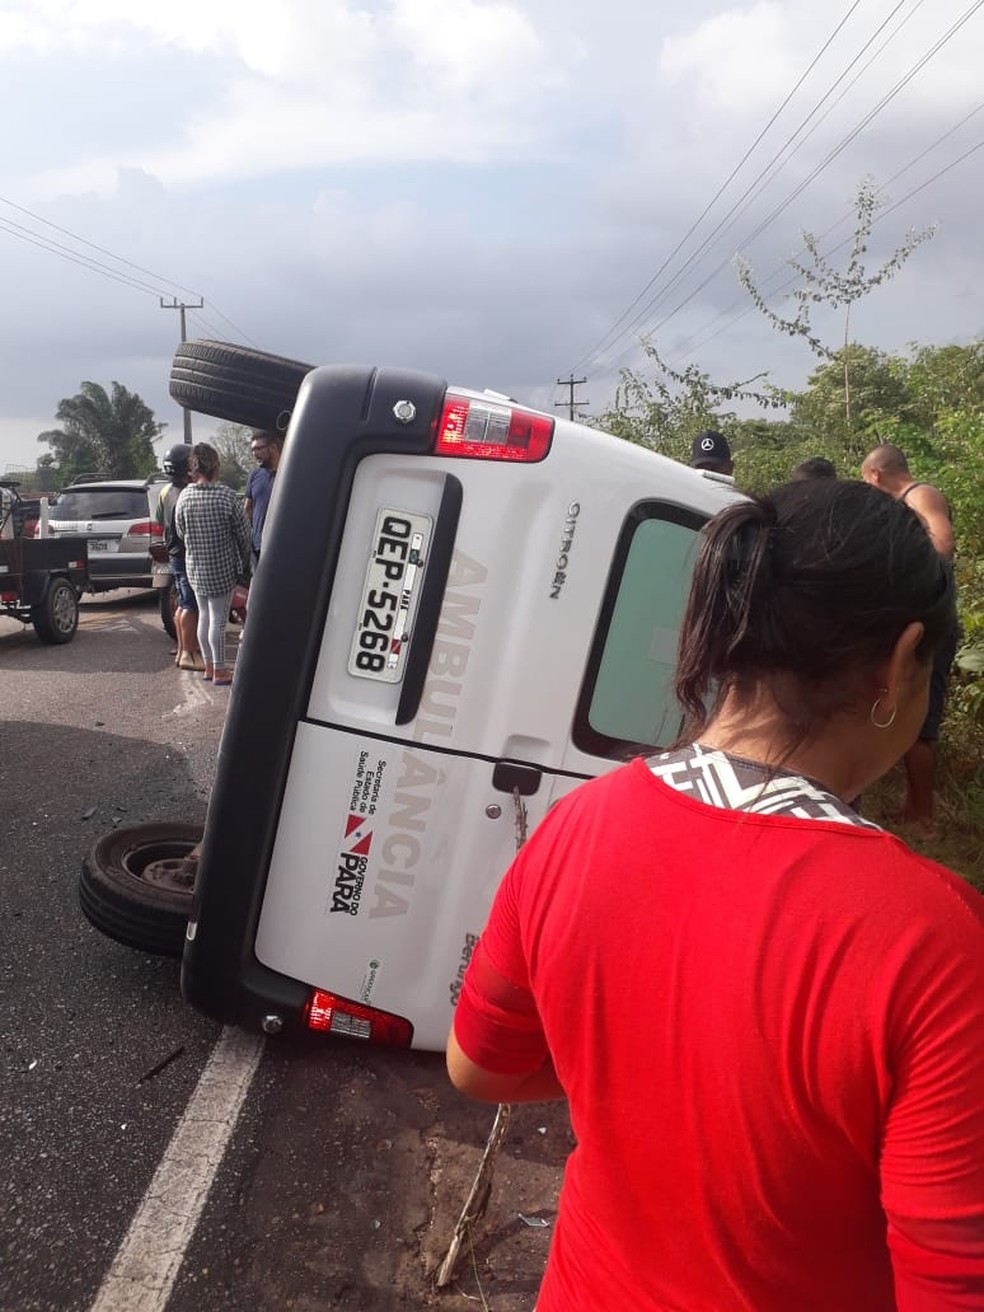 acidente ambulancia viatura — Foto: Policia Militar 